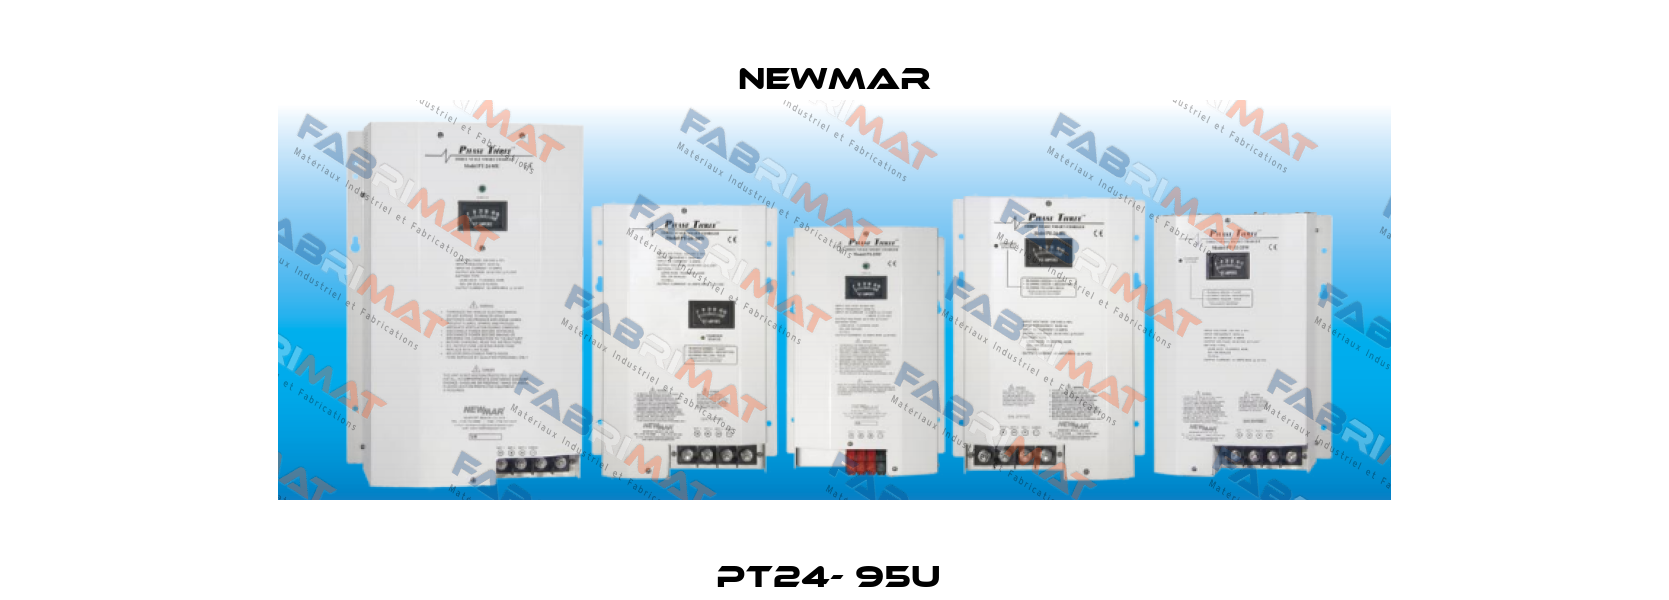 PT24- 95U  Newmar